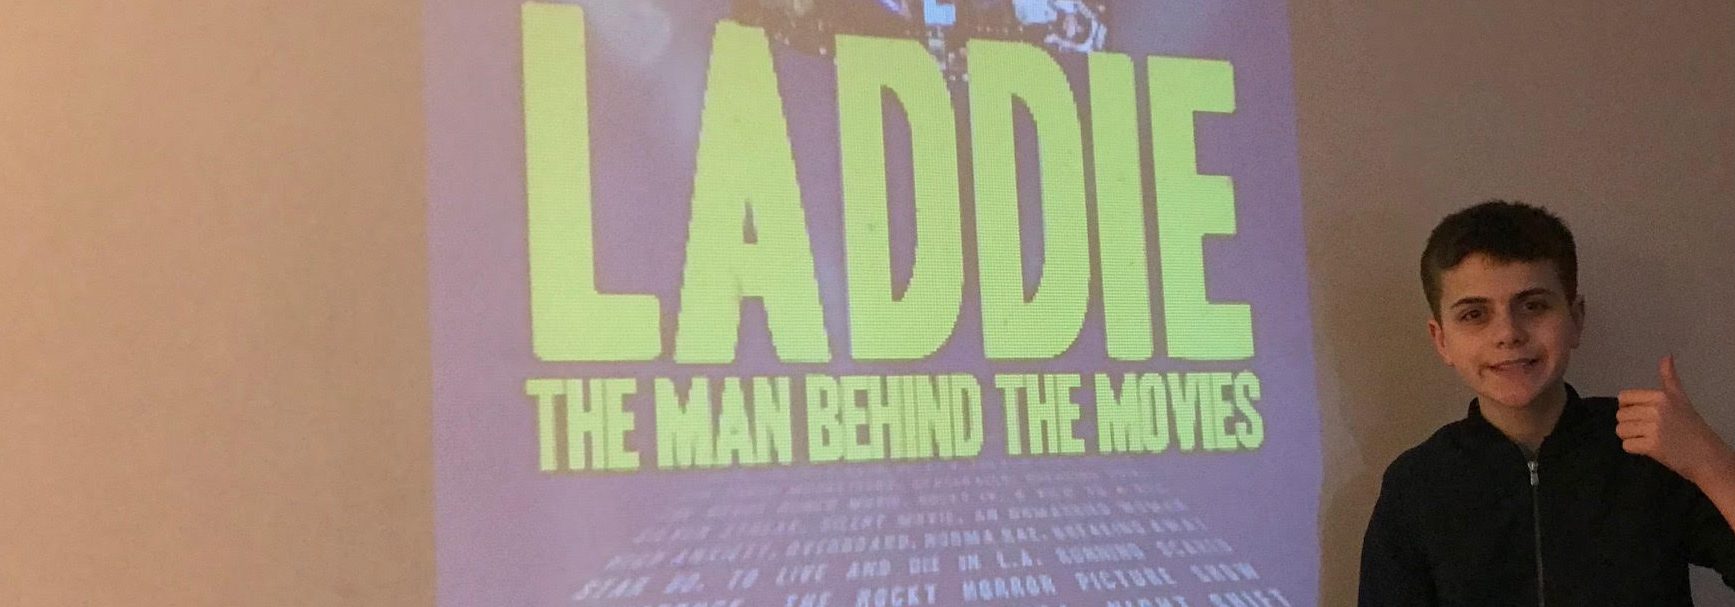 Laddie – The Man Behind the Movies